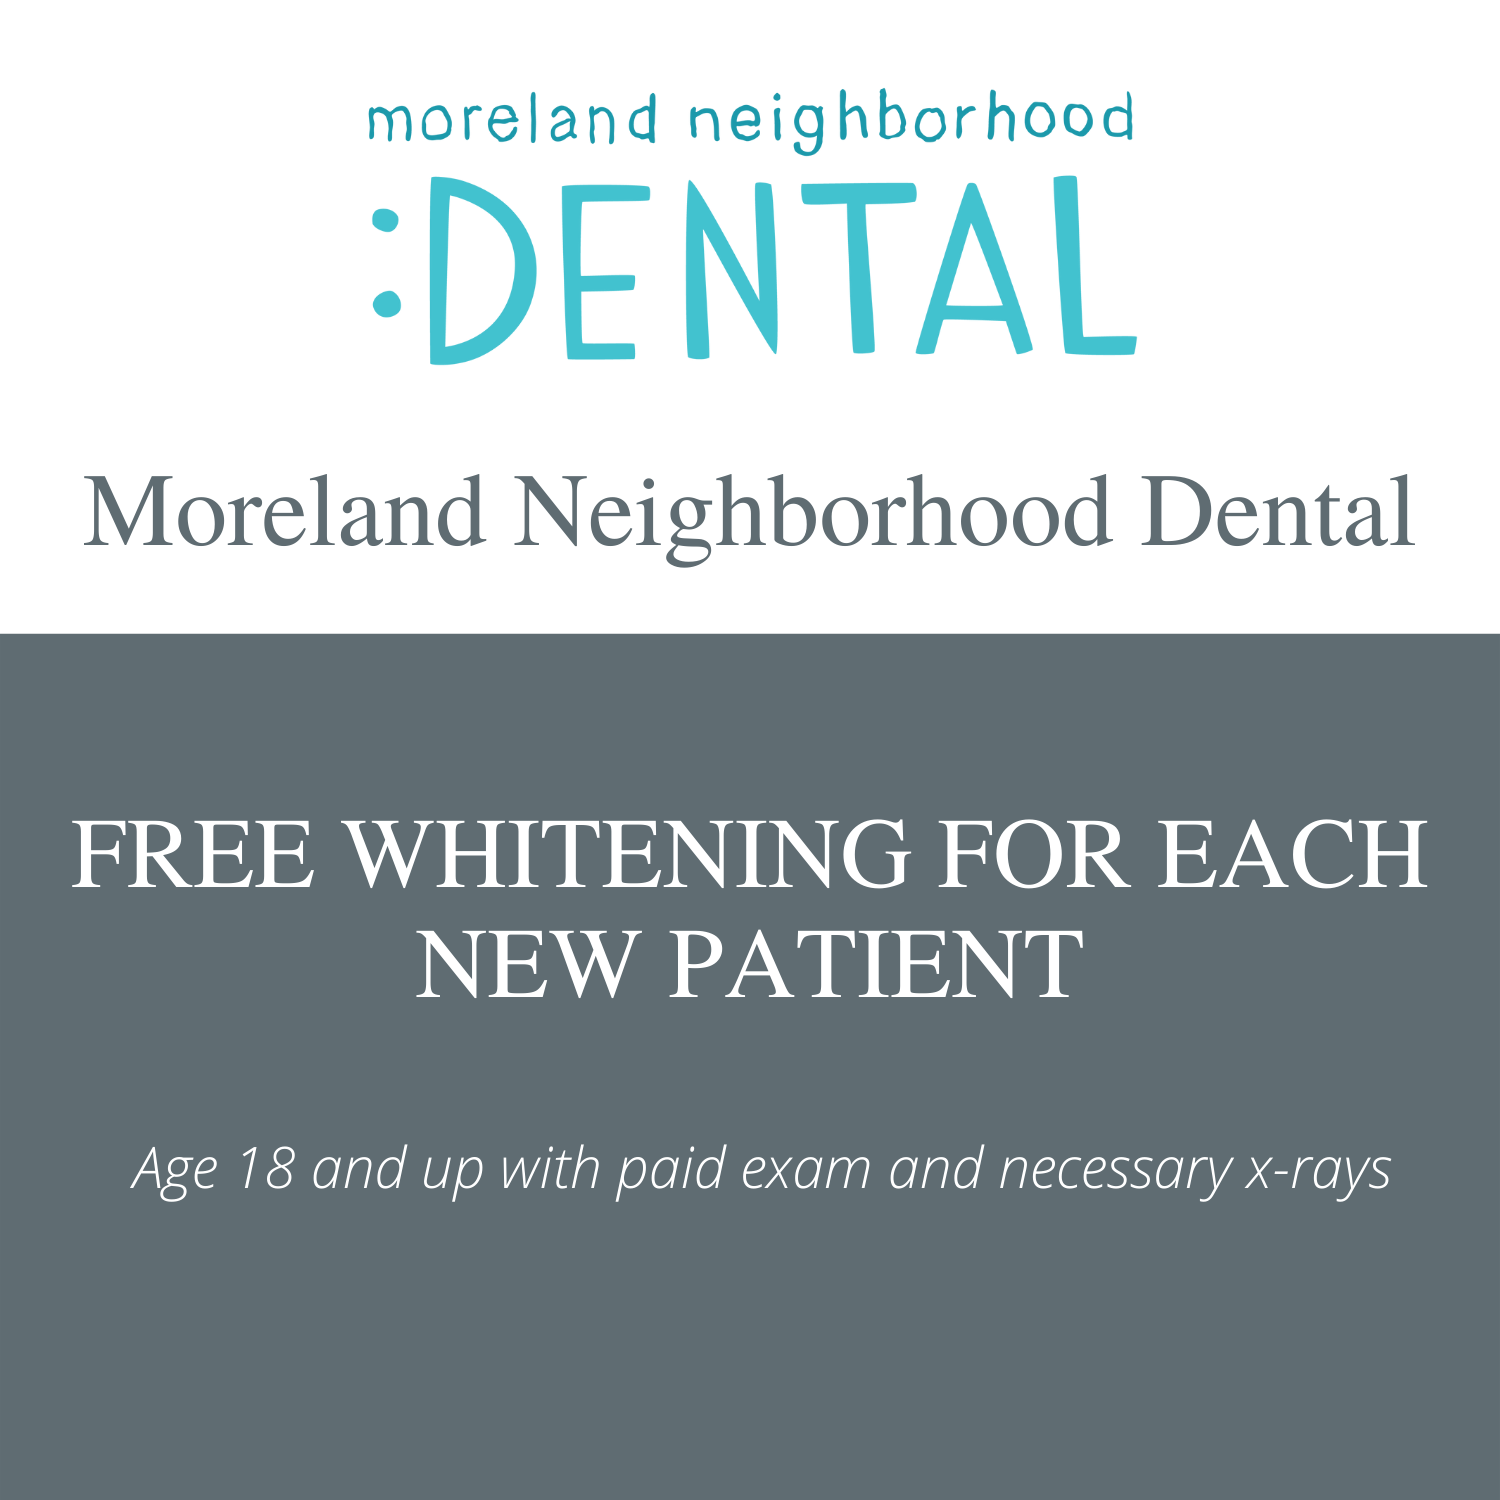 Moreland Neighborhood Dental Flyer